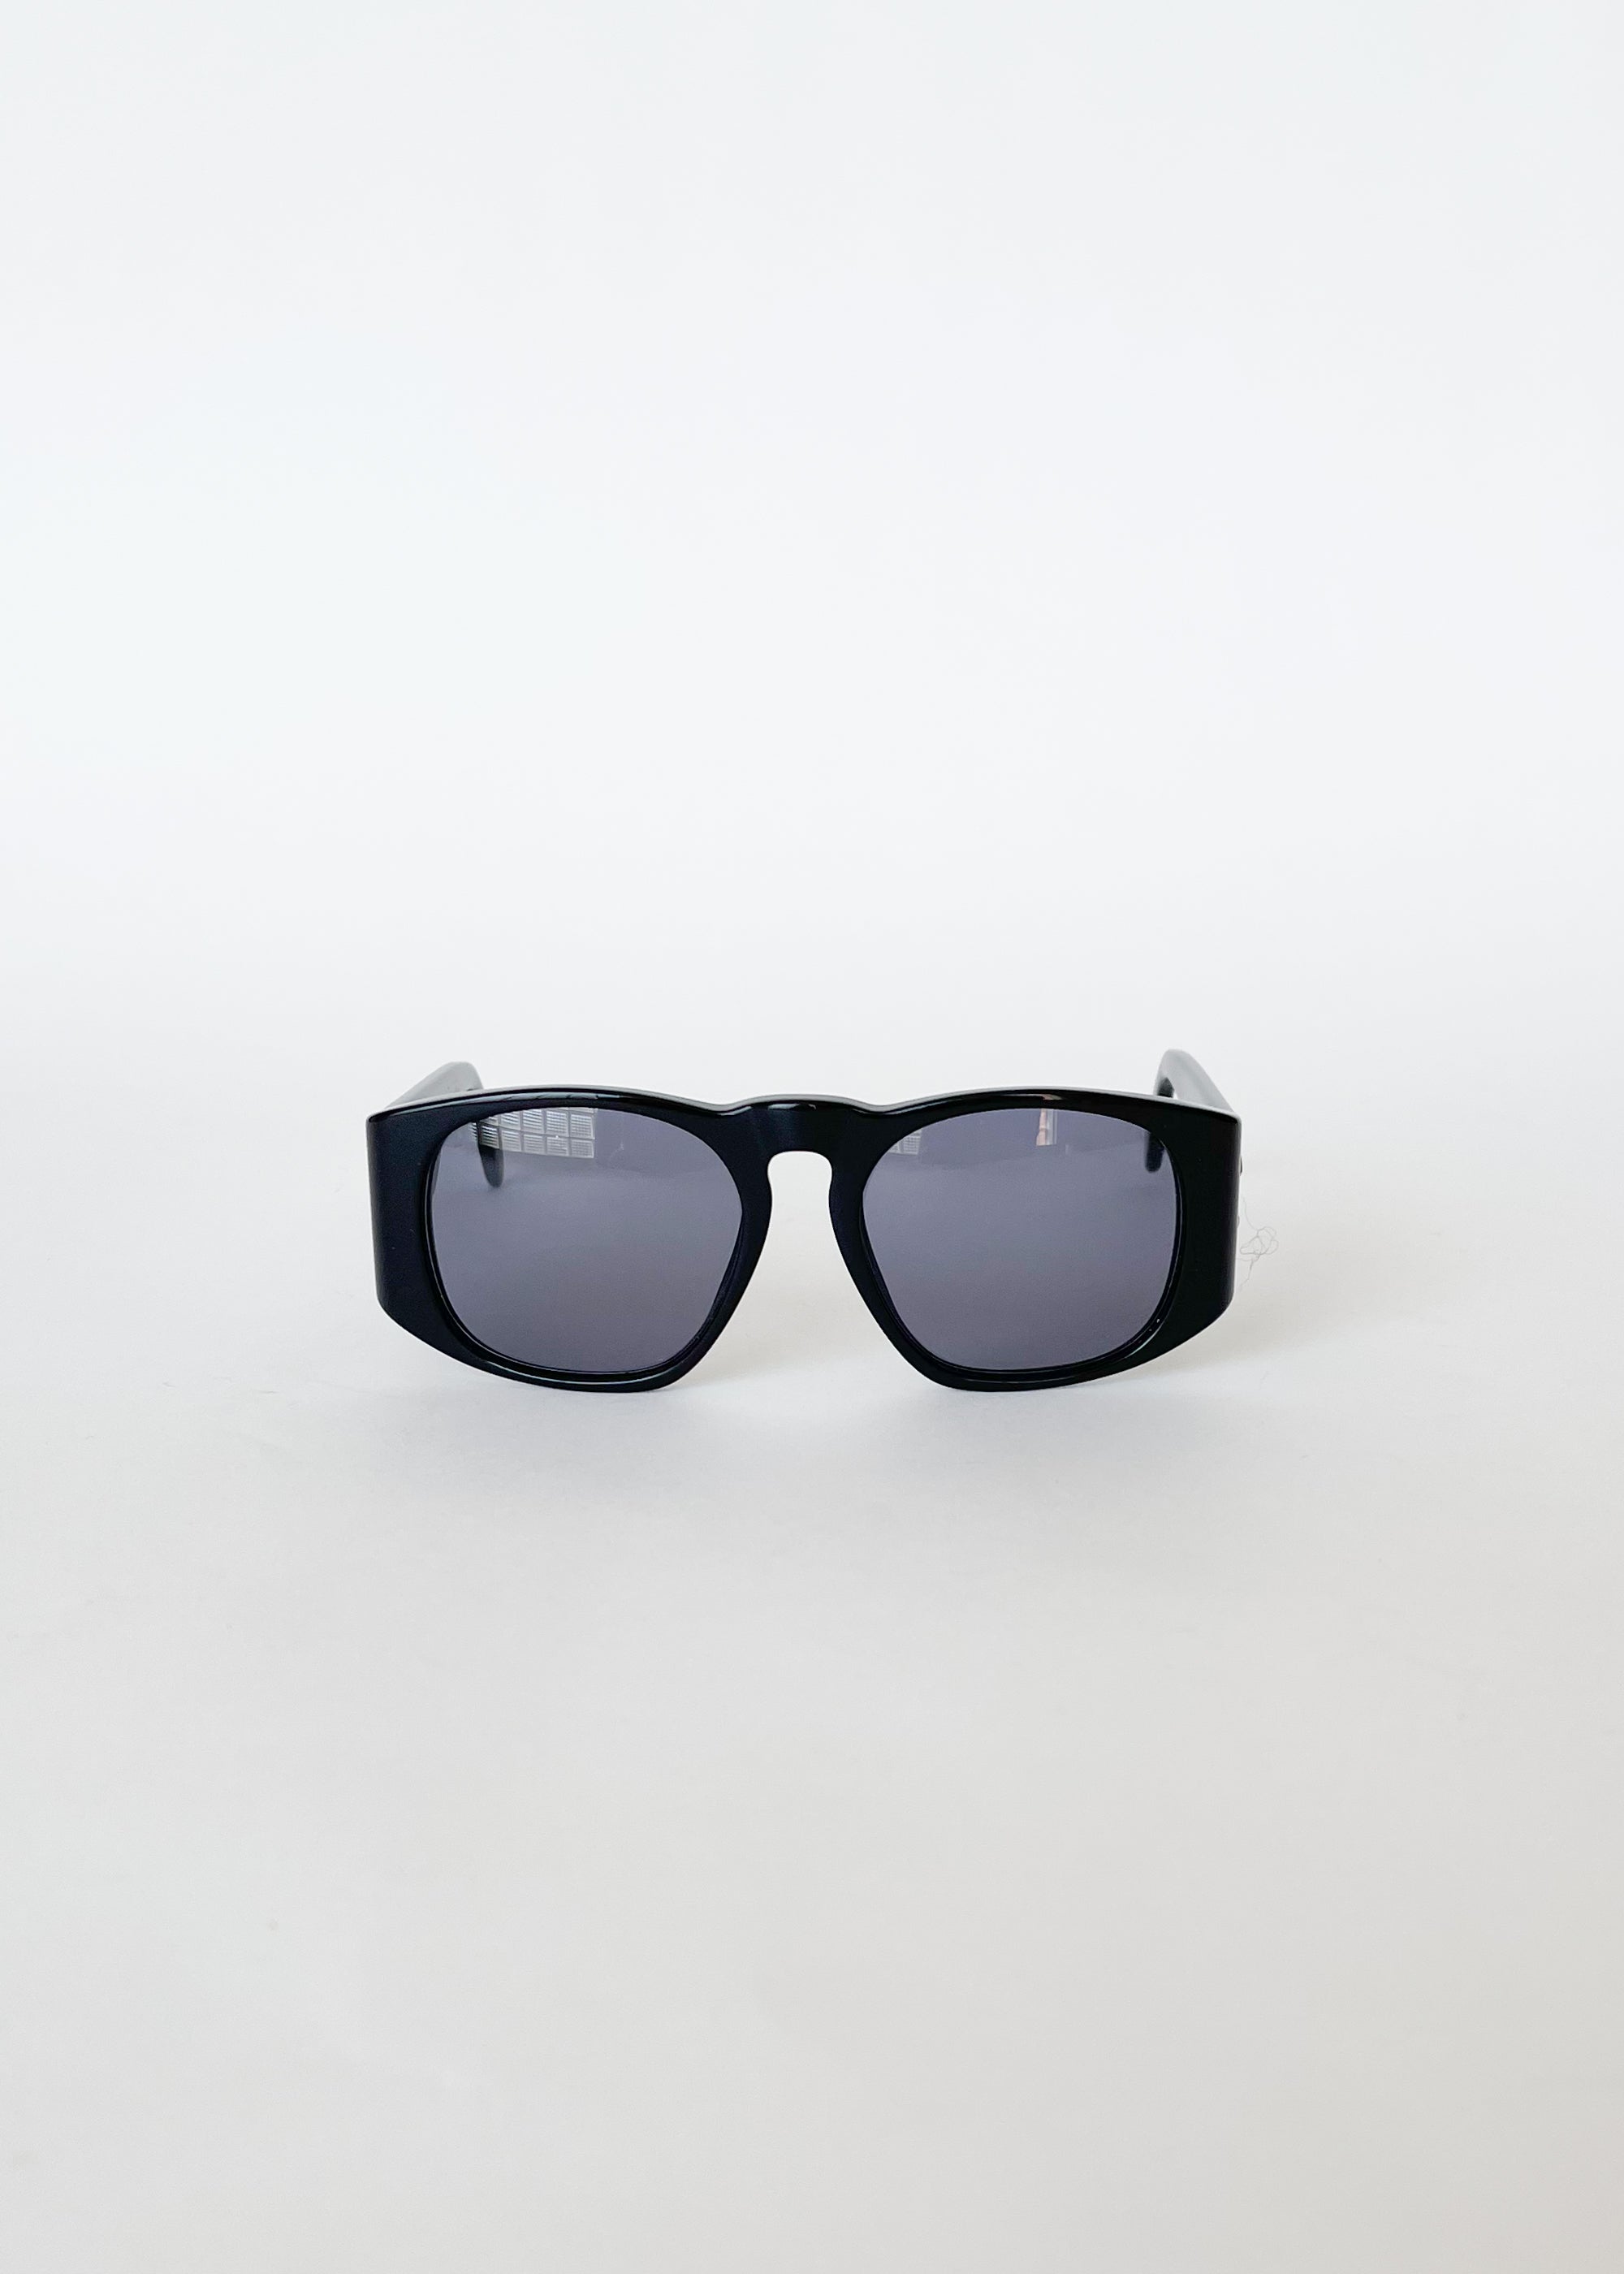 CHANEL Vintage Sunglasses 10513 Runaway Camera Lens Black & Grey Eyewear  Glasses